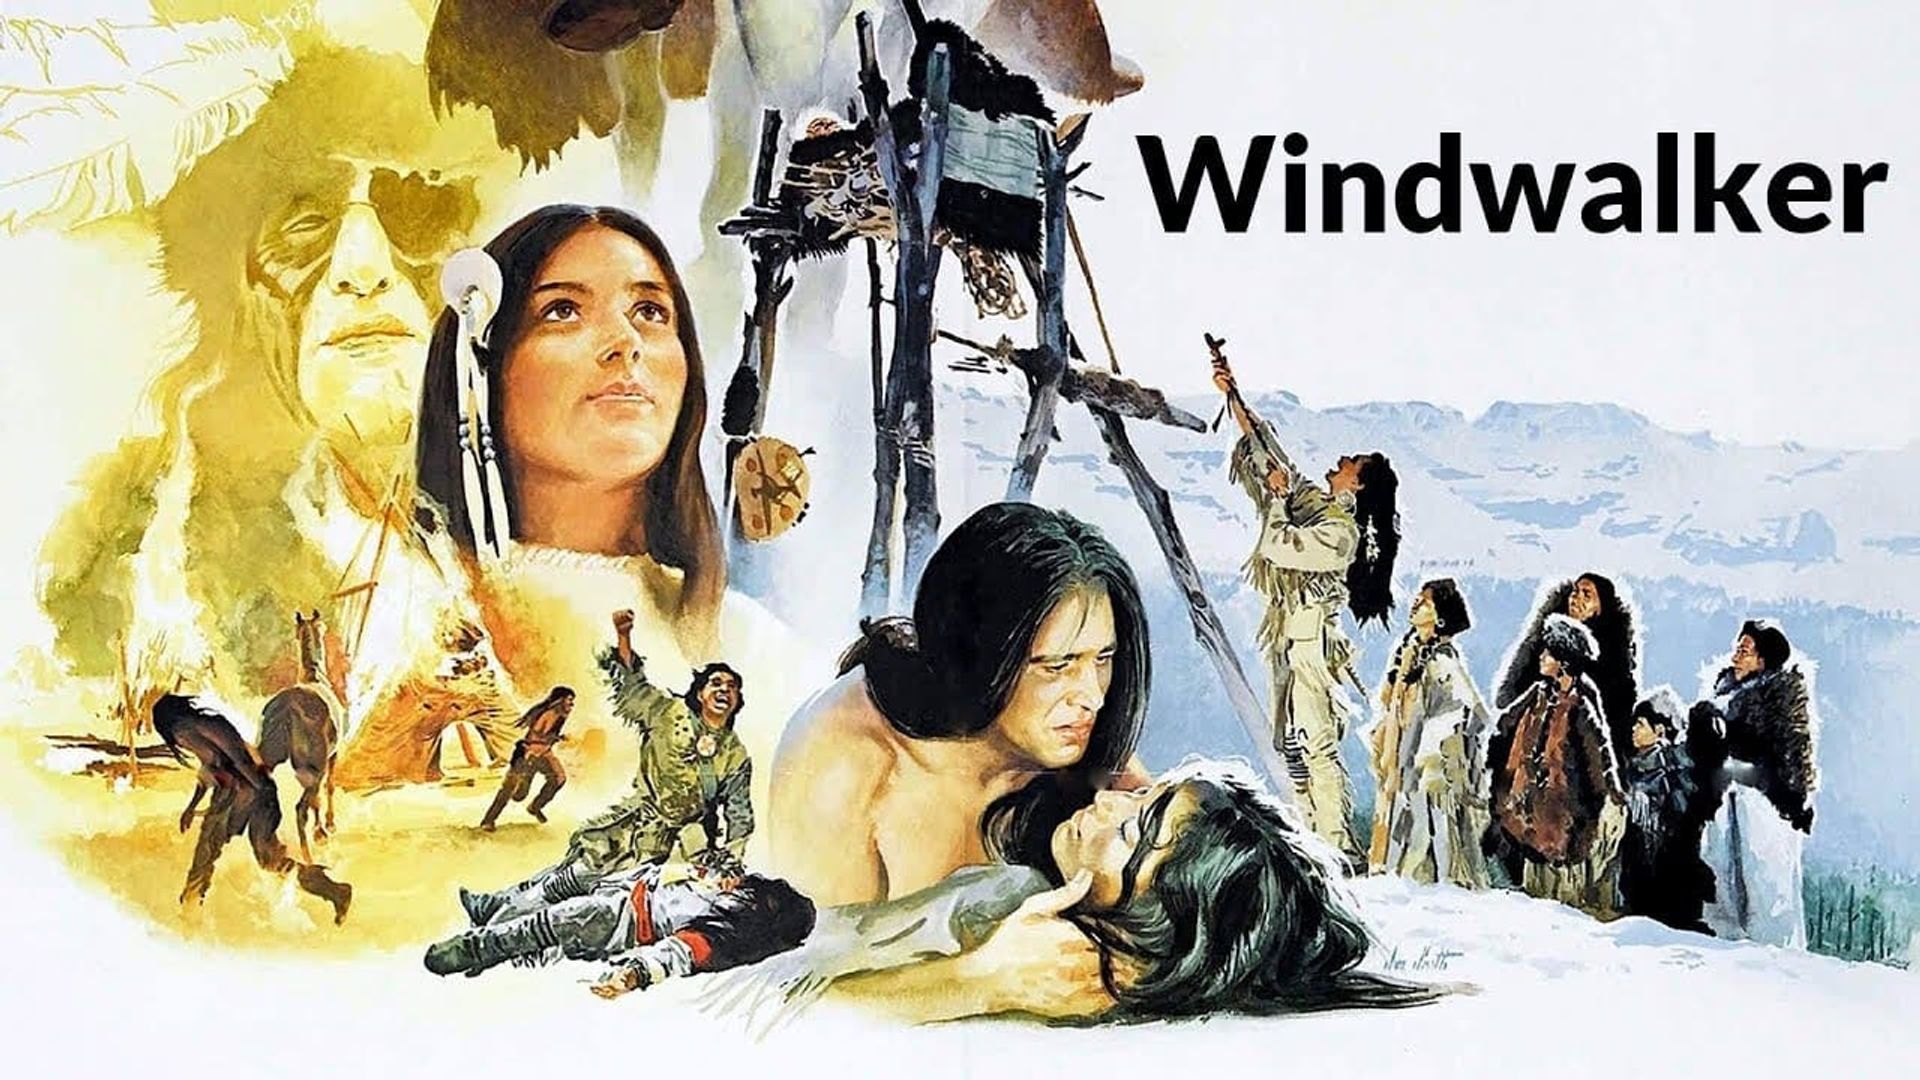 Windwalker background